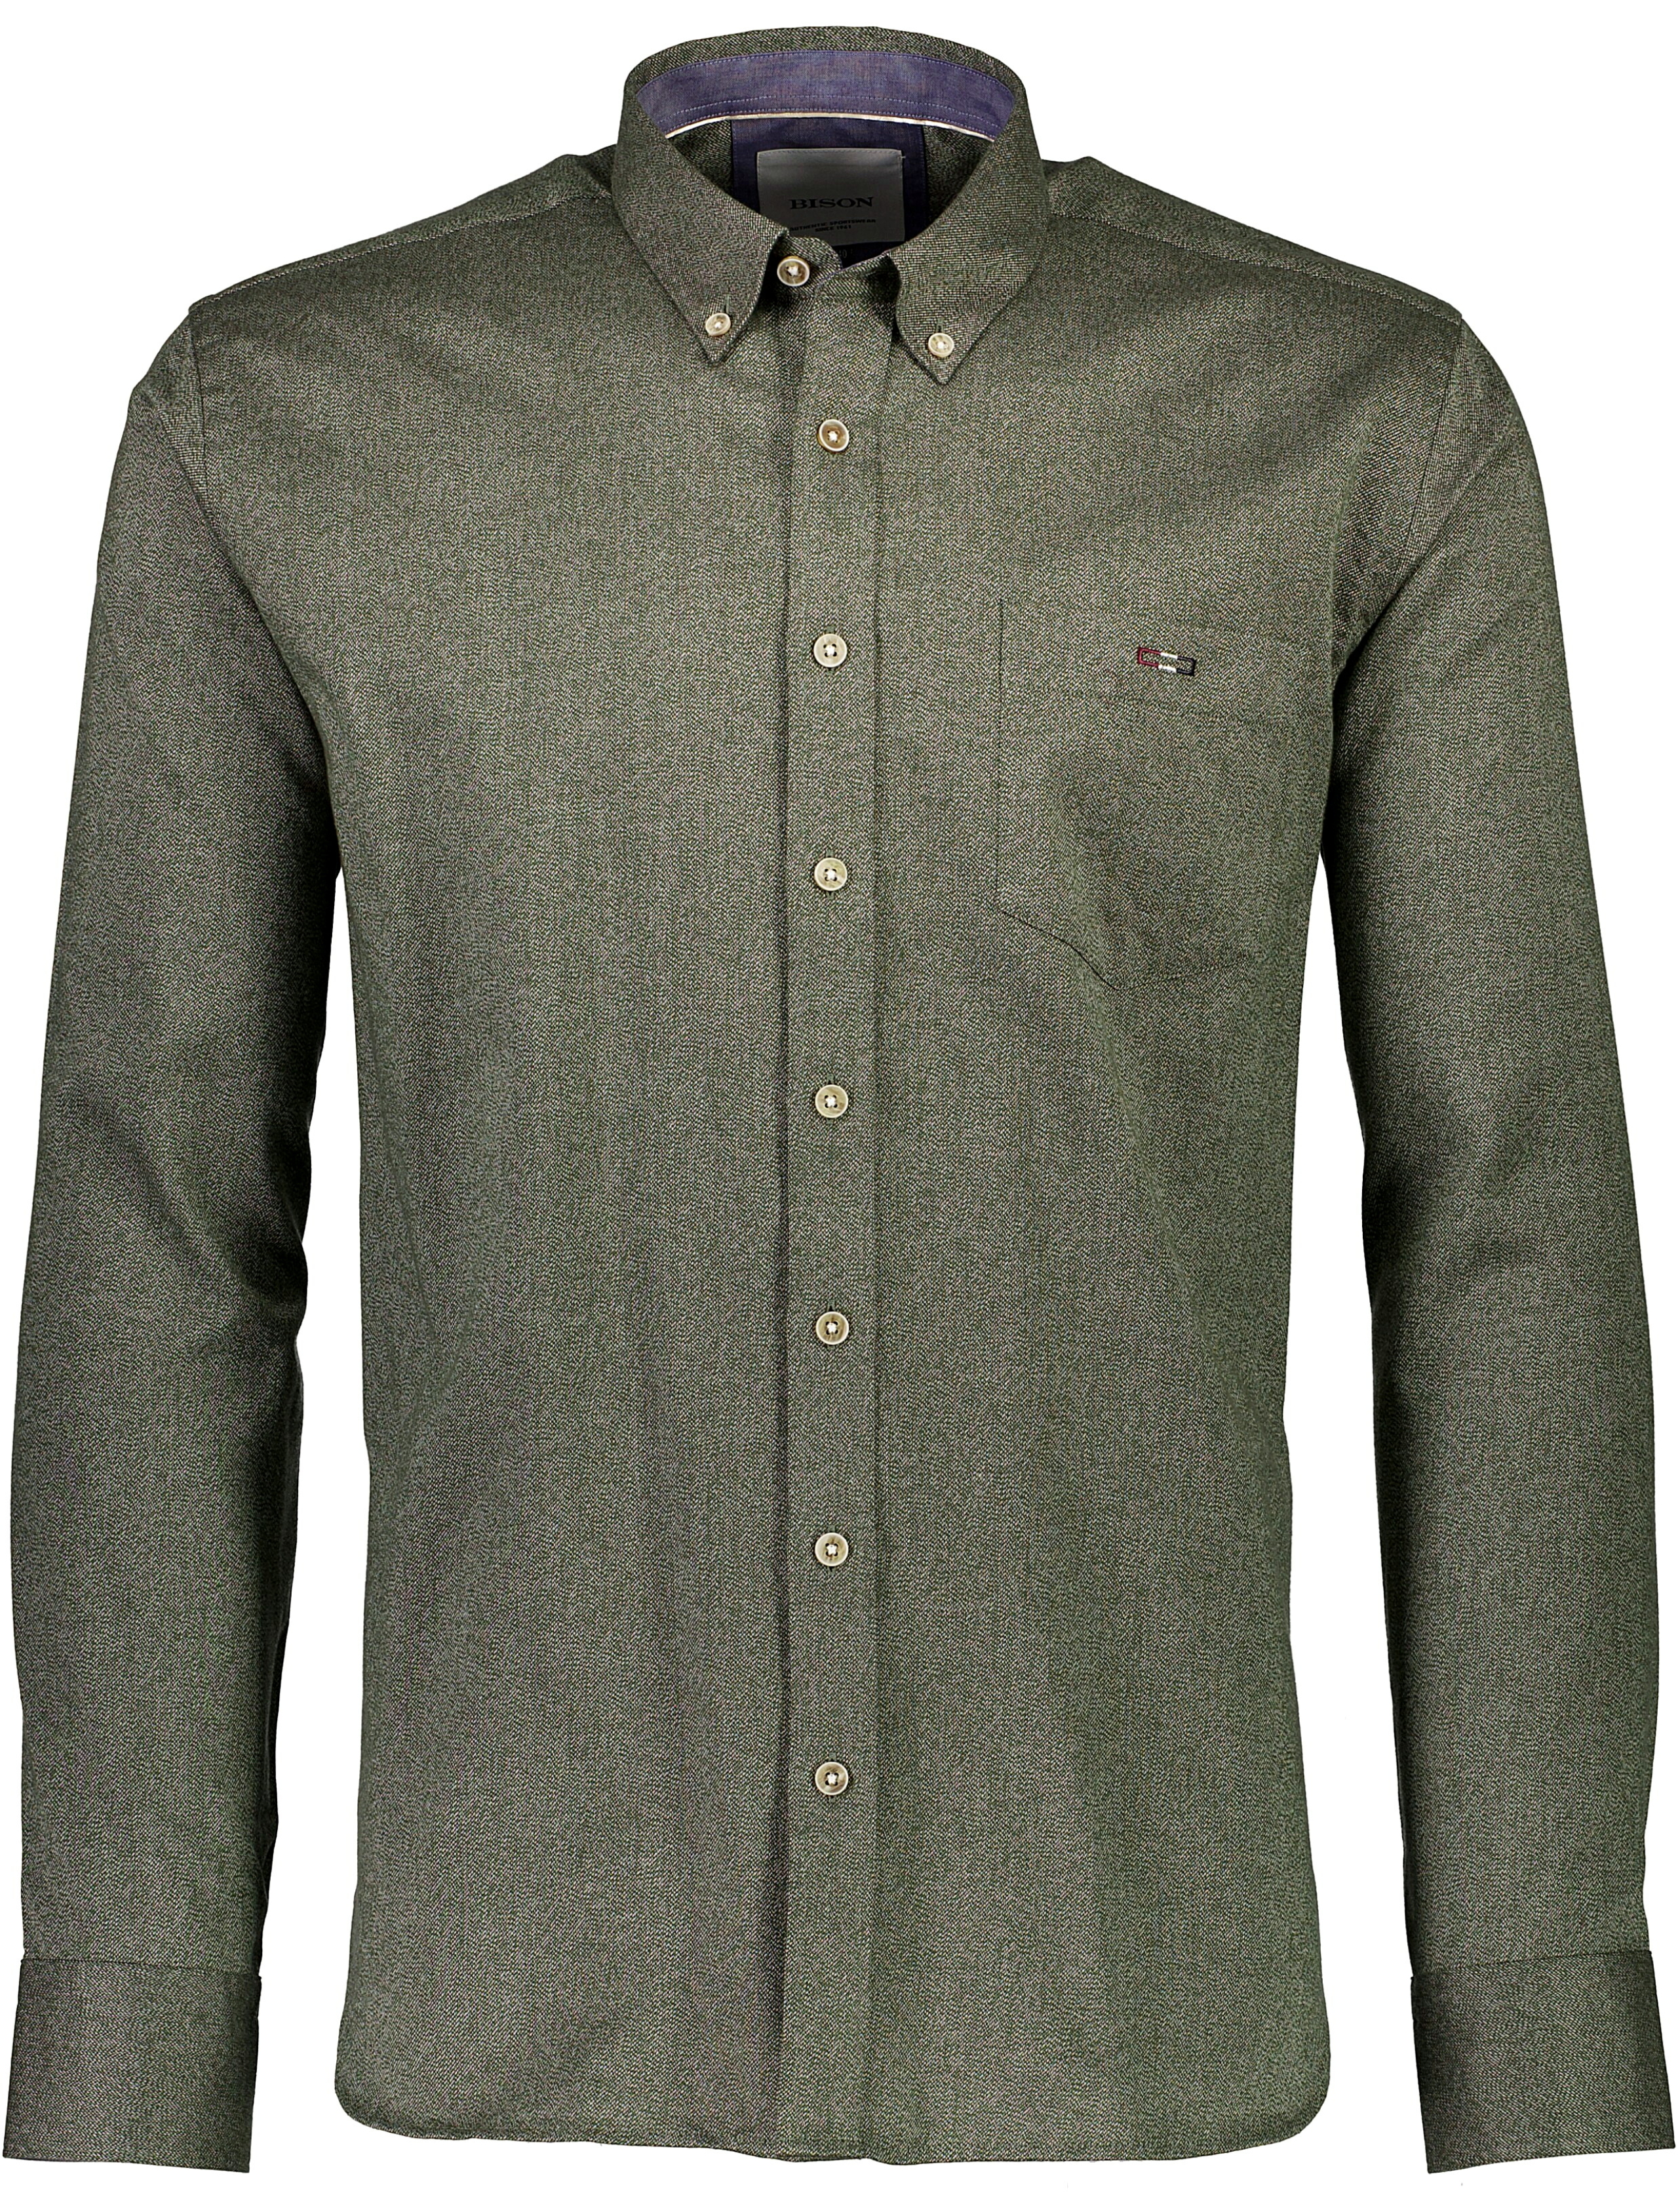 Bison Casual skjorte grøn / army